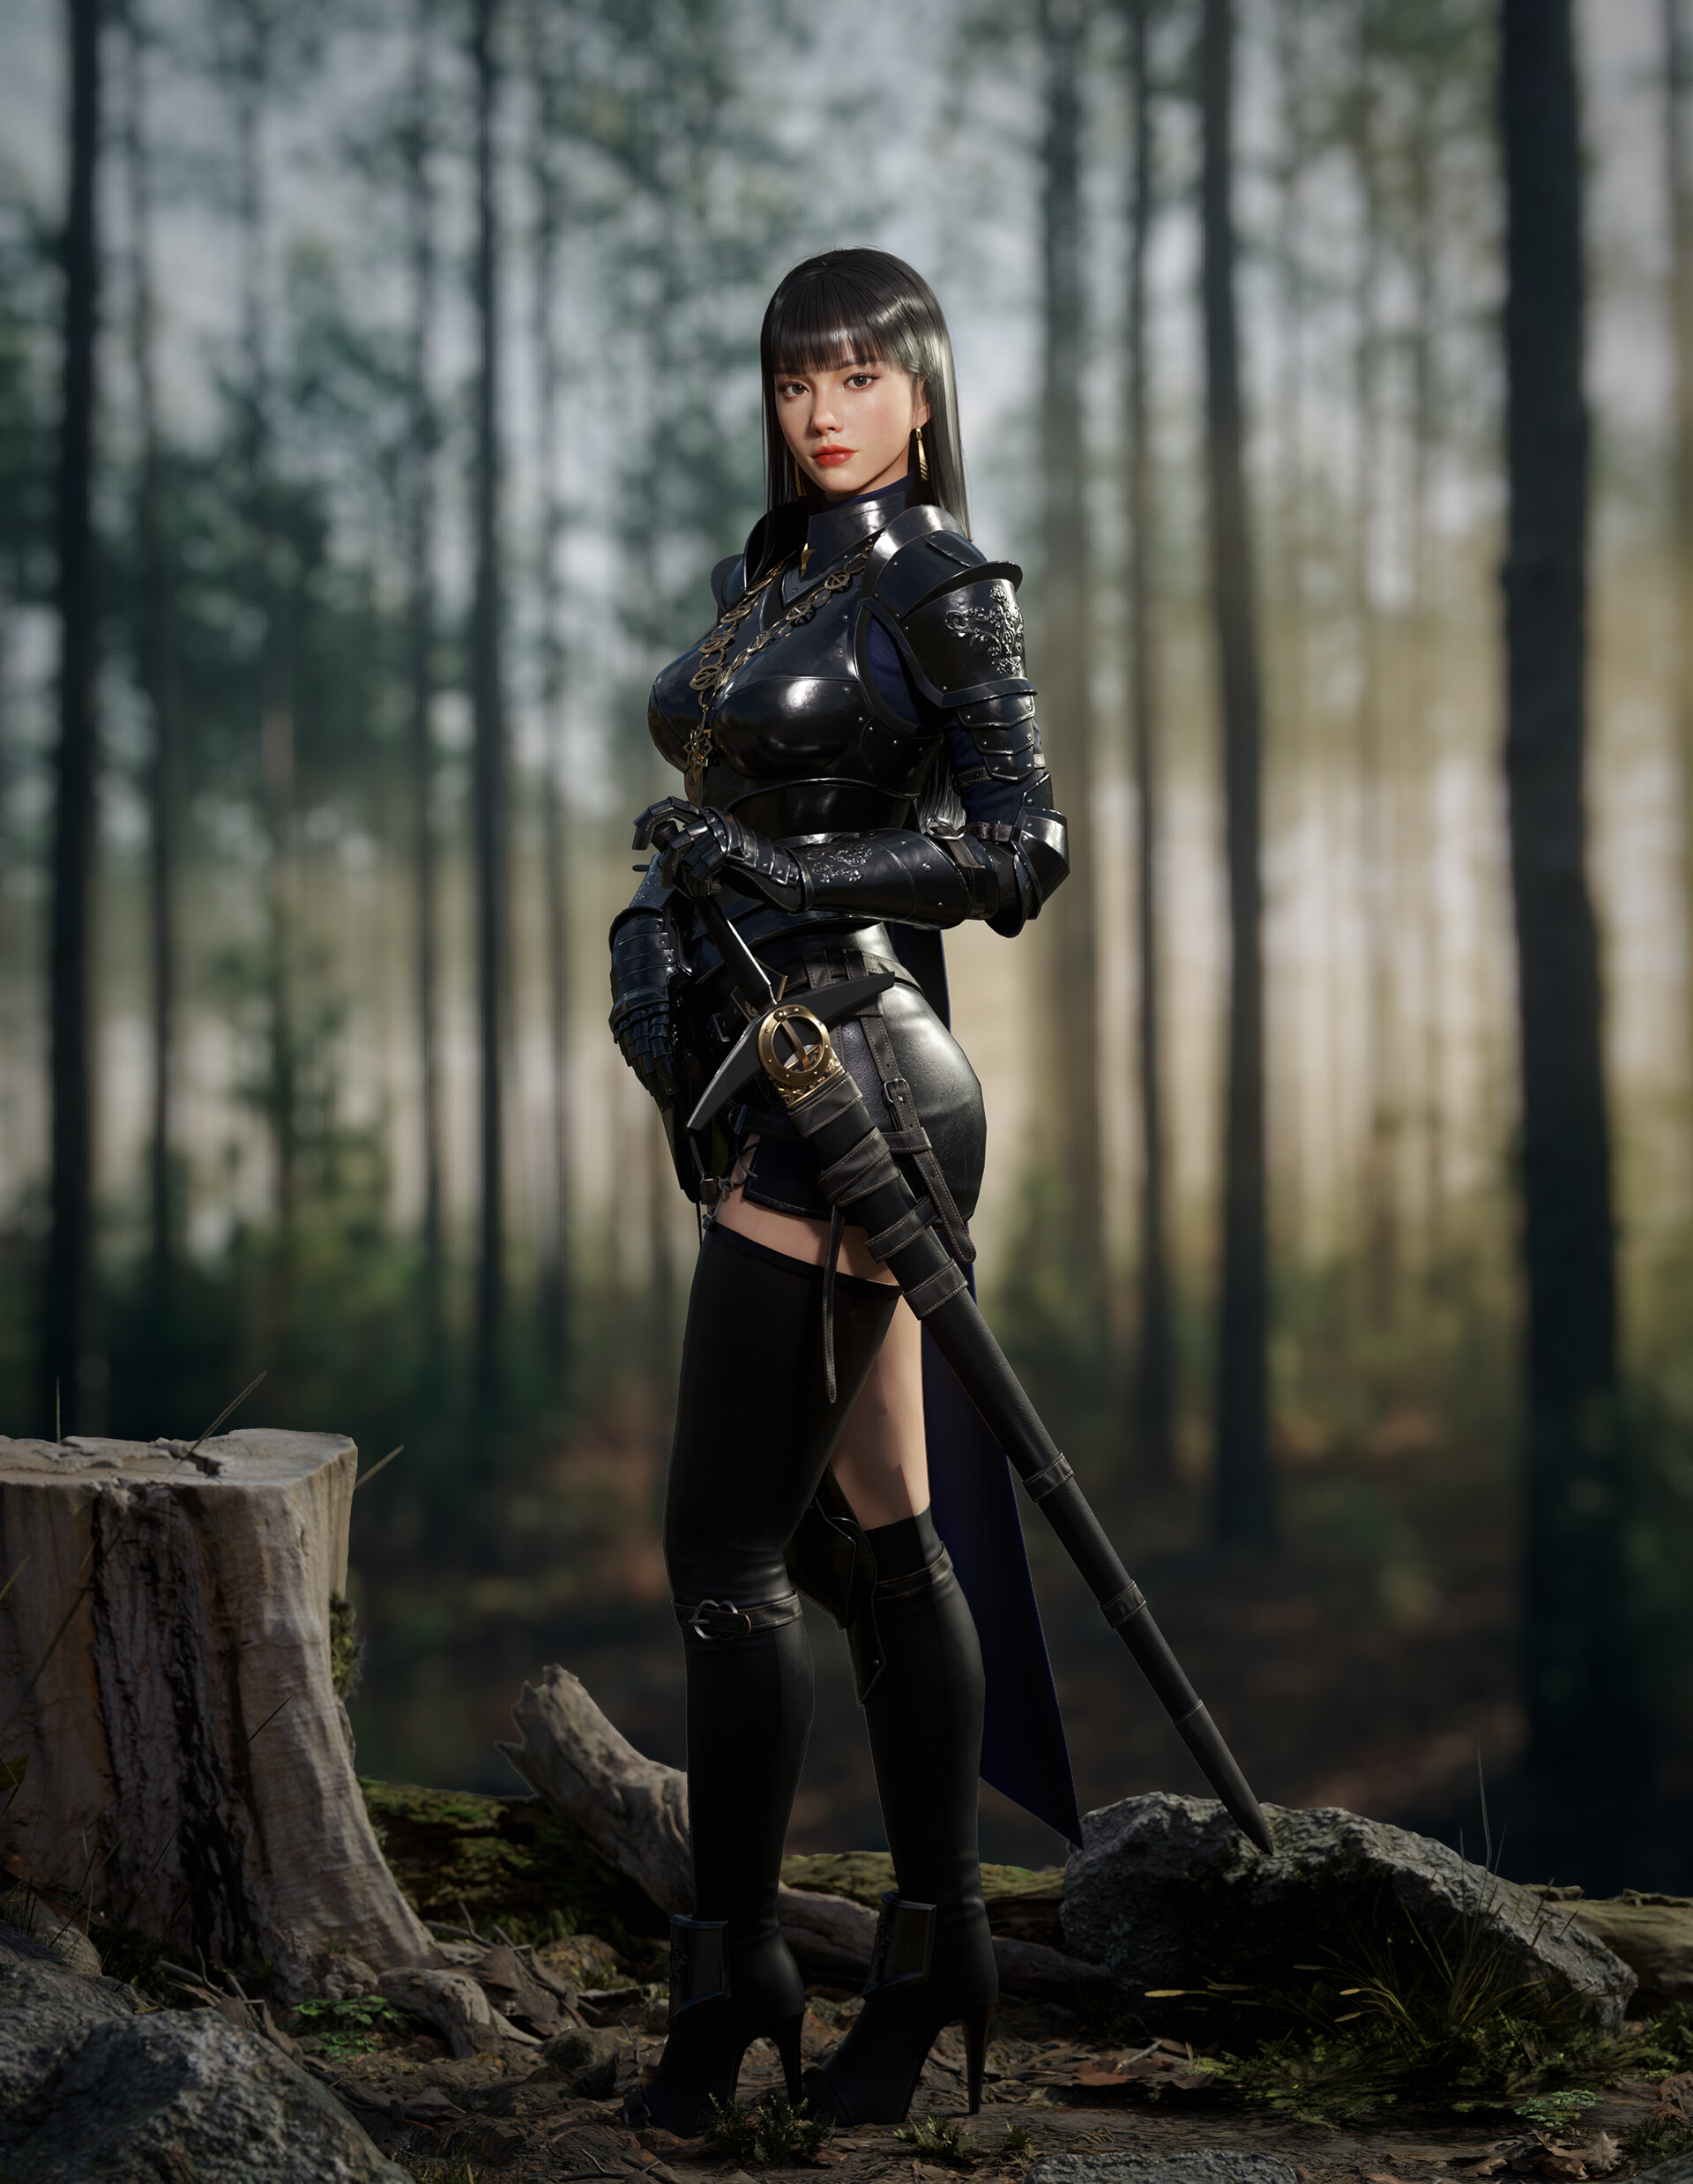 General 1920x2477 Ji Chang Choi CGI women knight armor black fantasy art weapon sword dark hair forest tree stump bangs Asian